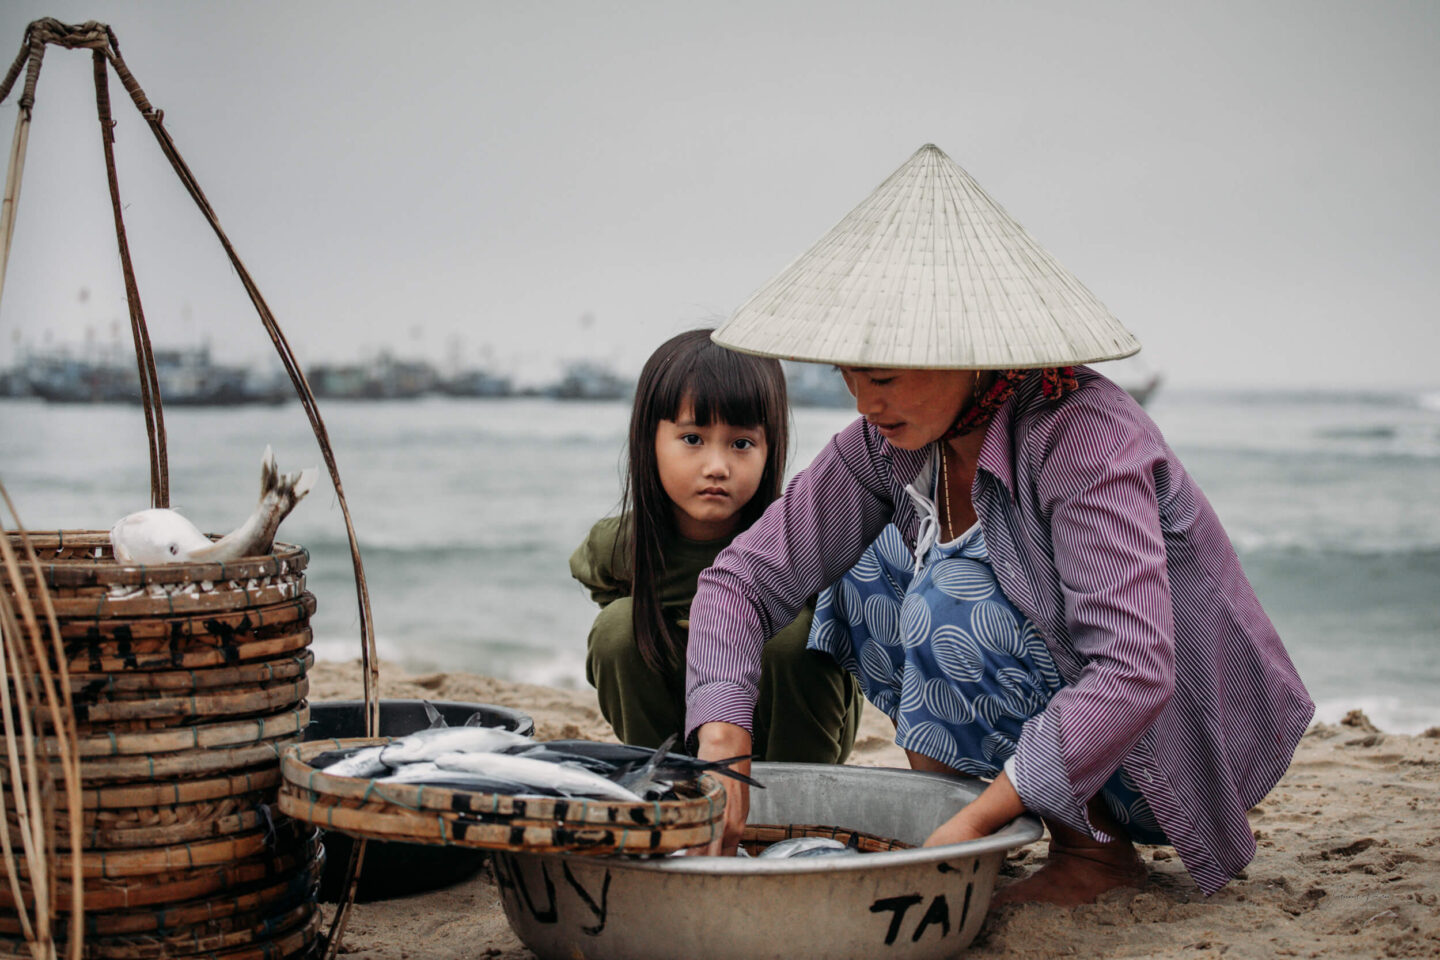 Vietnam travel, The many faces of Vietnam - photo essay